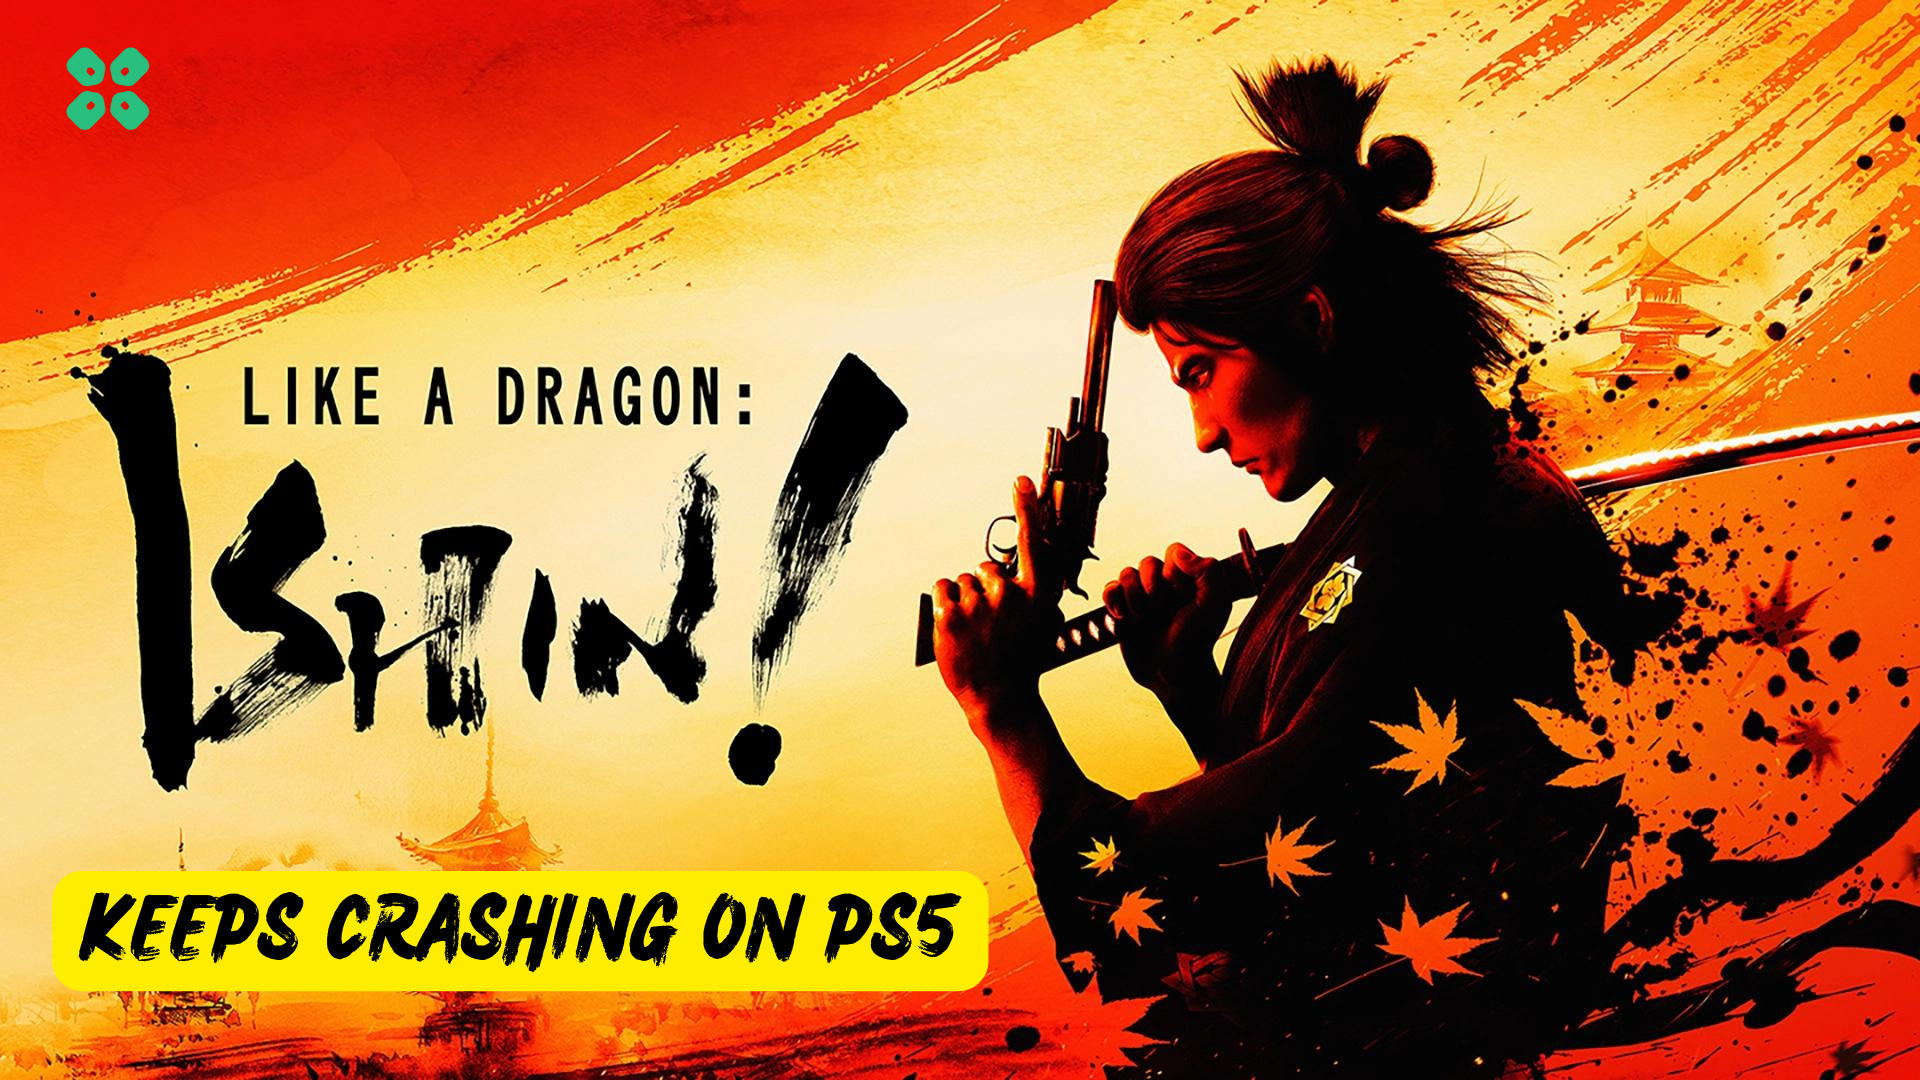 Like a Dragon Ishin keeps crashing on ps5